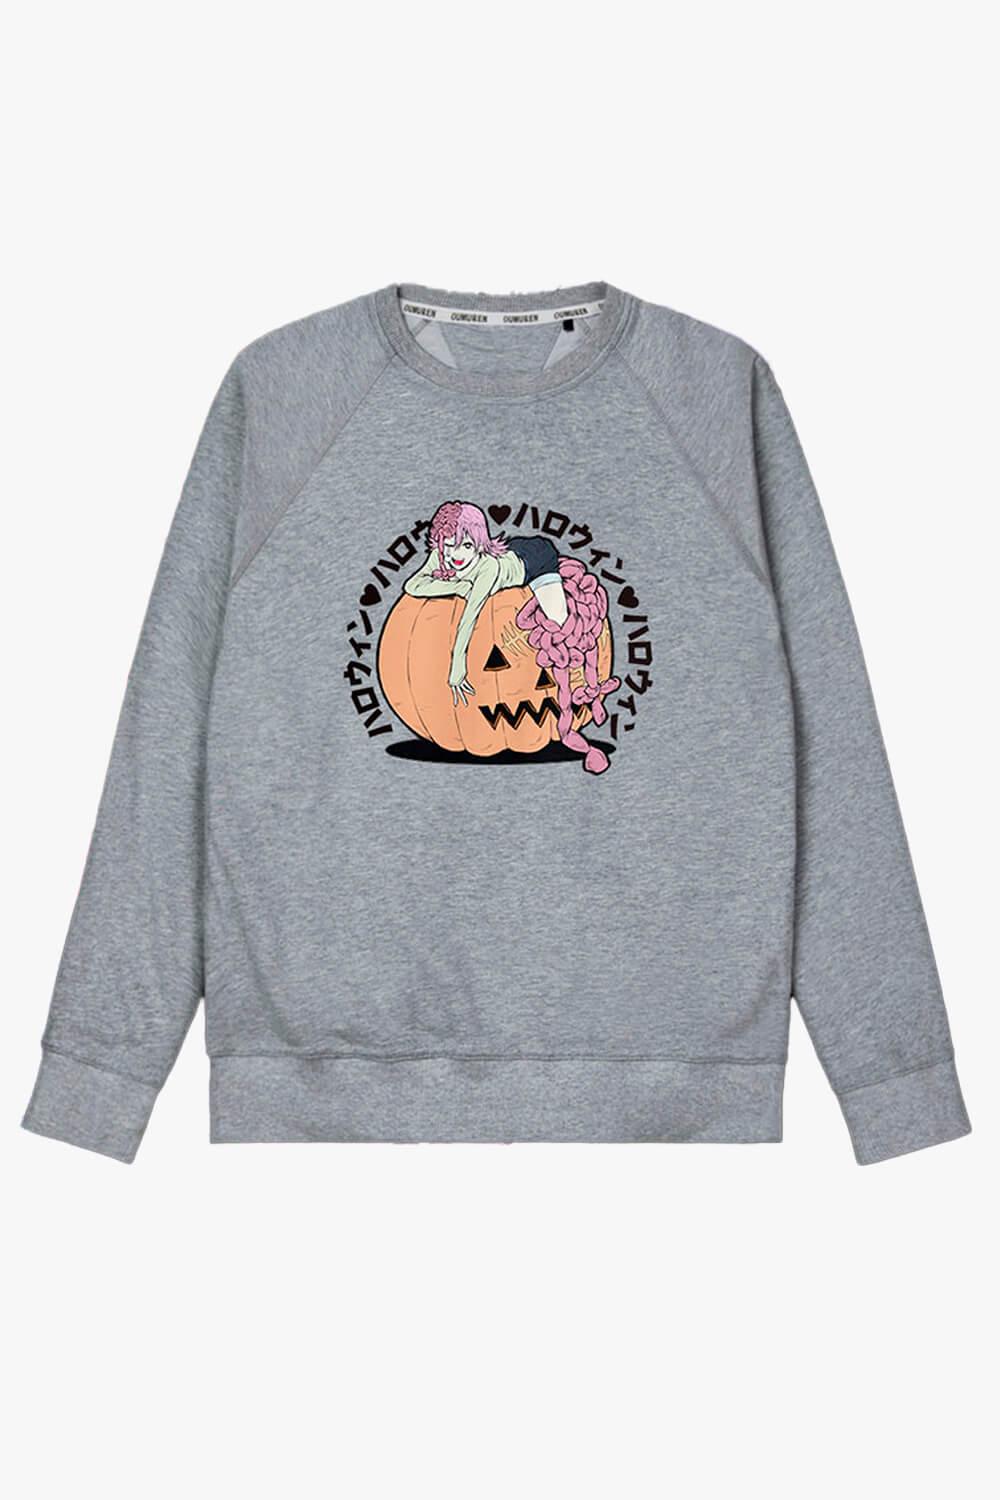 Cosmo Pumpkin Chainsaw Man Halloween Sweatshirt - Aesthetic Clothes Shop